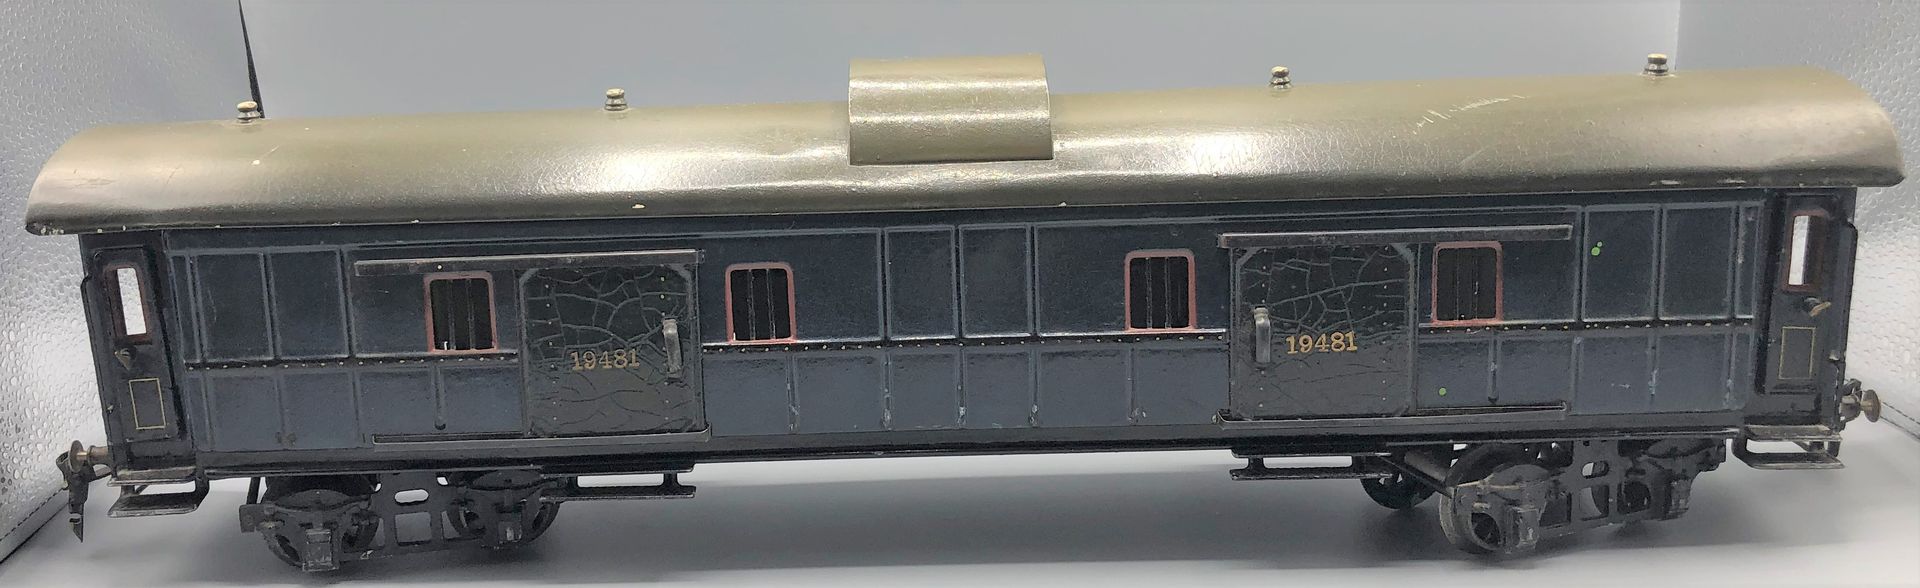 Null 
MARKLIN -1-




标有19481的蓝色行李车，有4个滑动门和4个开启门。两个转向架和一个屋顶灯。 




1920 - 1930

&hellip;